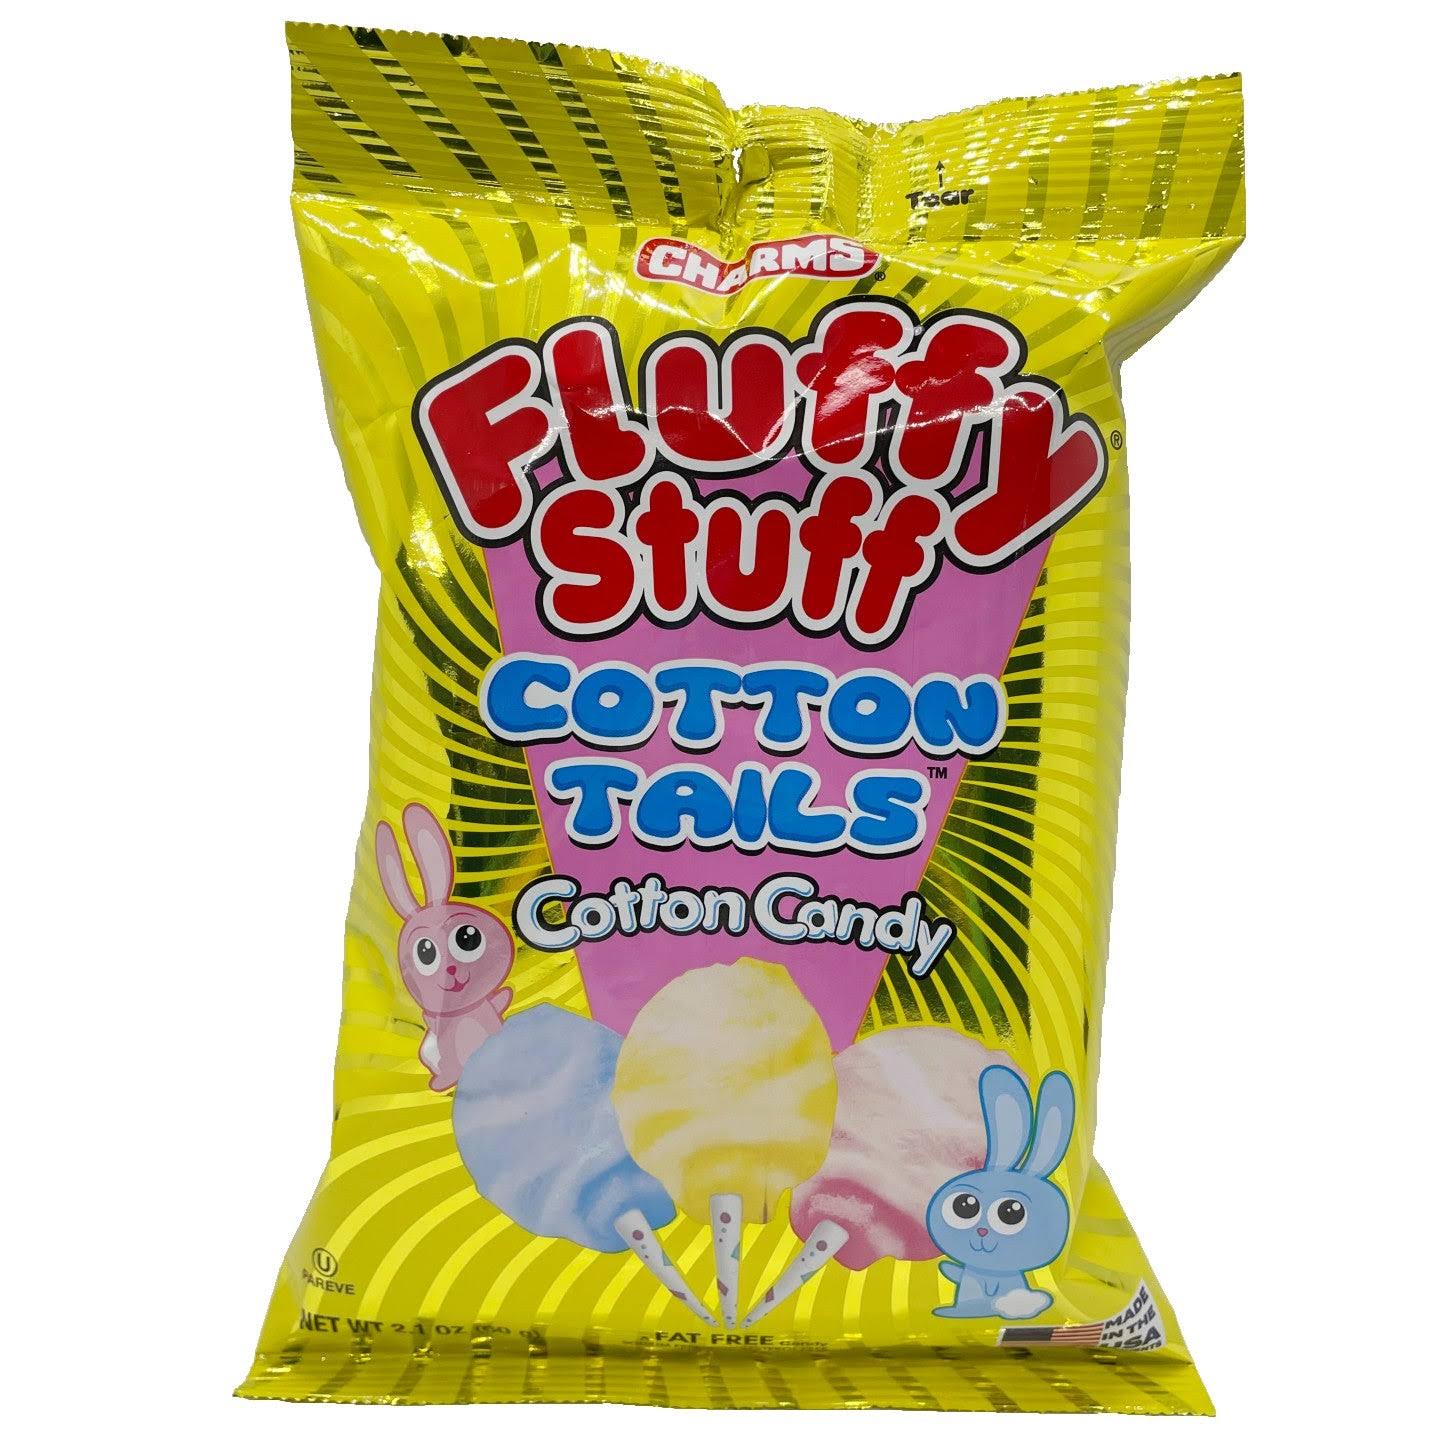 Buy Charms Fluffy Stuff Birthday Cake Cotton Candy ( 60g / 2.1oz )